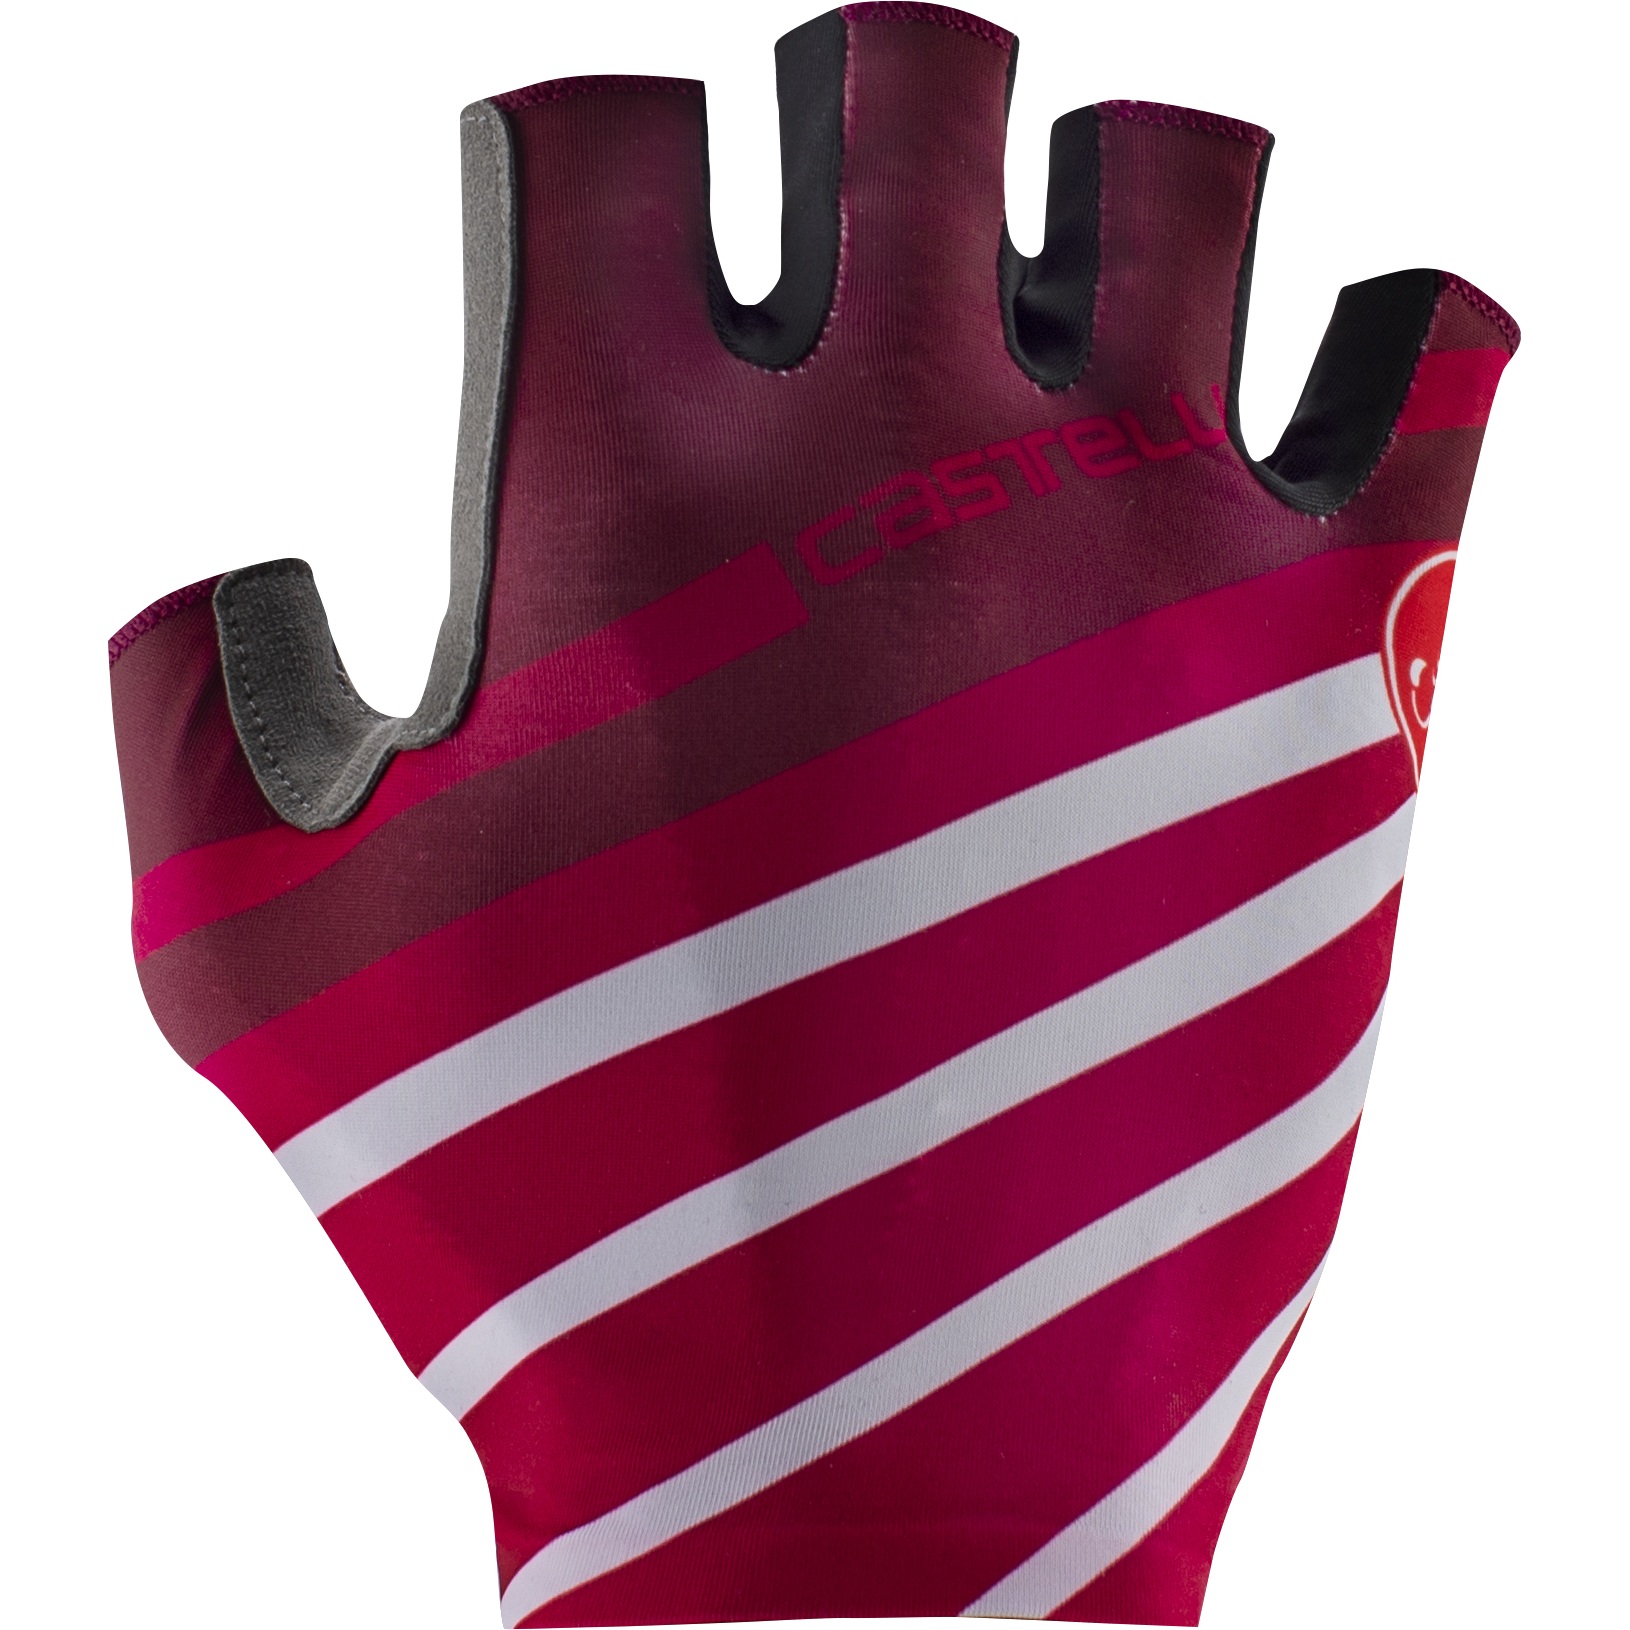 Picture of Castelli Competizione 2 Gloves - bordeaux/persian red 421